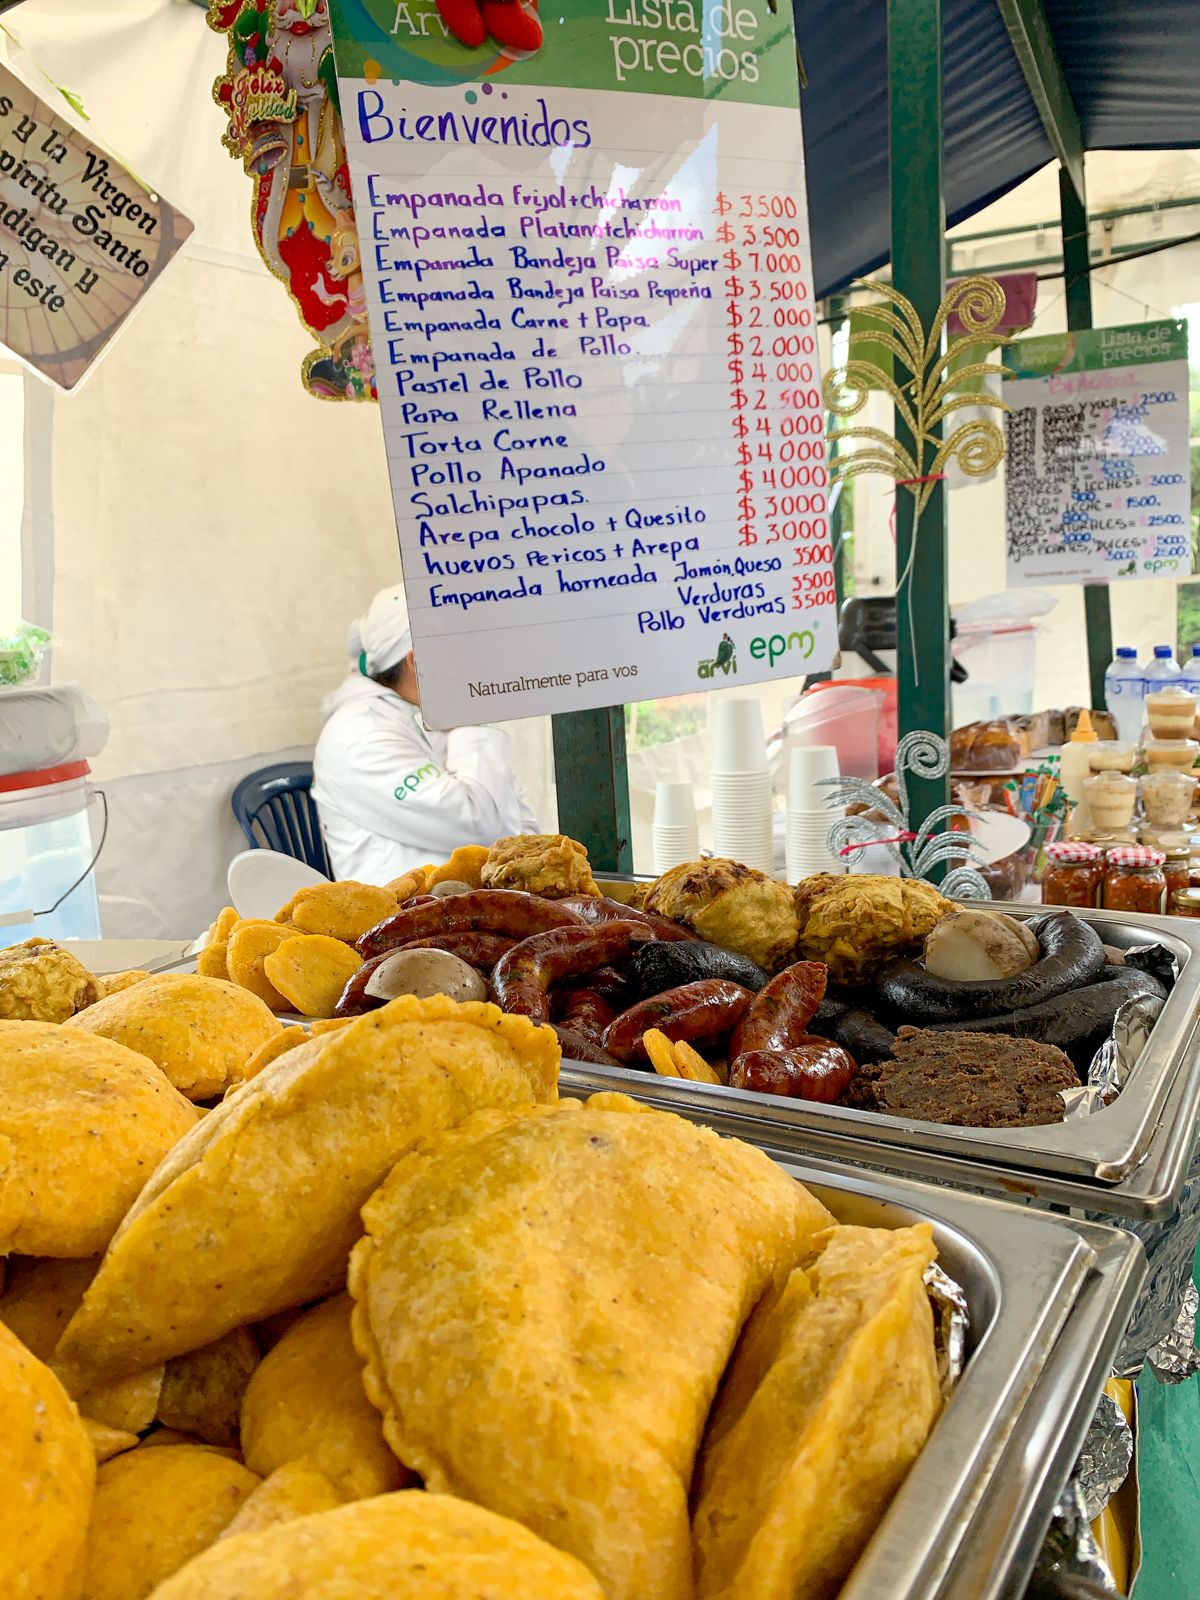 Giant empanadas, a ubiquitous Colombian food, at a farmer's market in Parque Arvi, Antioquia